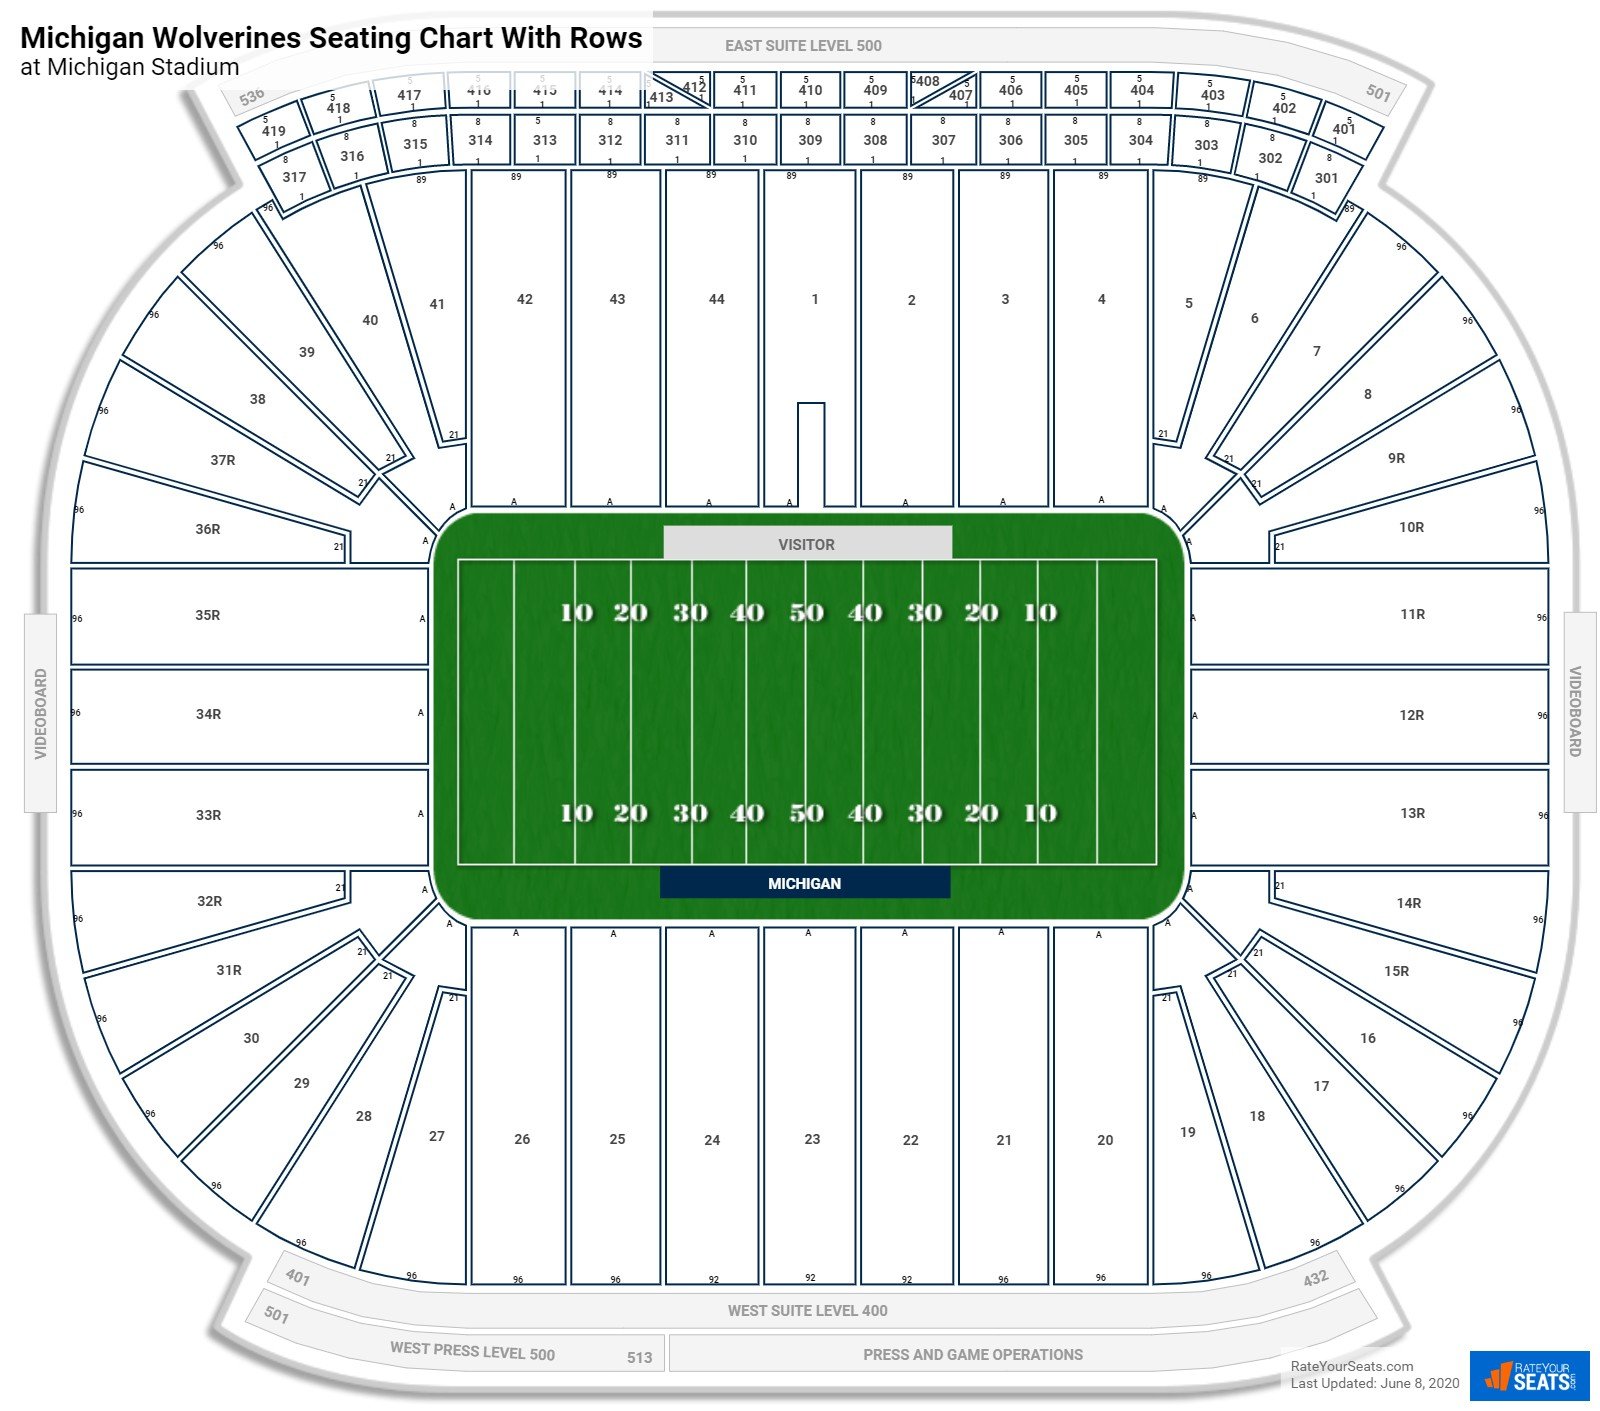 Notre Dame Stadium Seating Chart Cheap Tickets Asap.